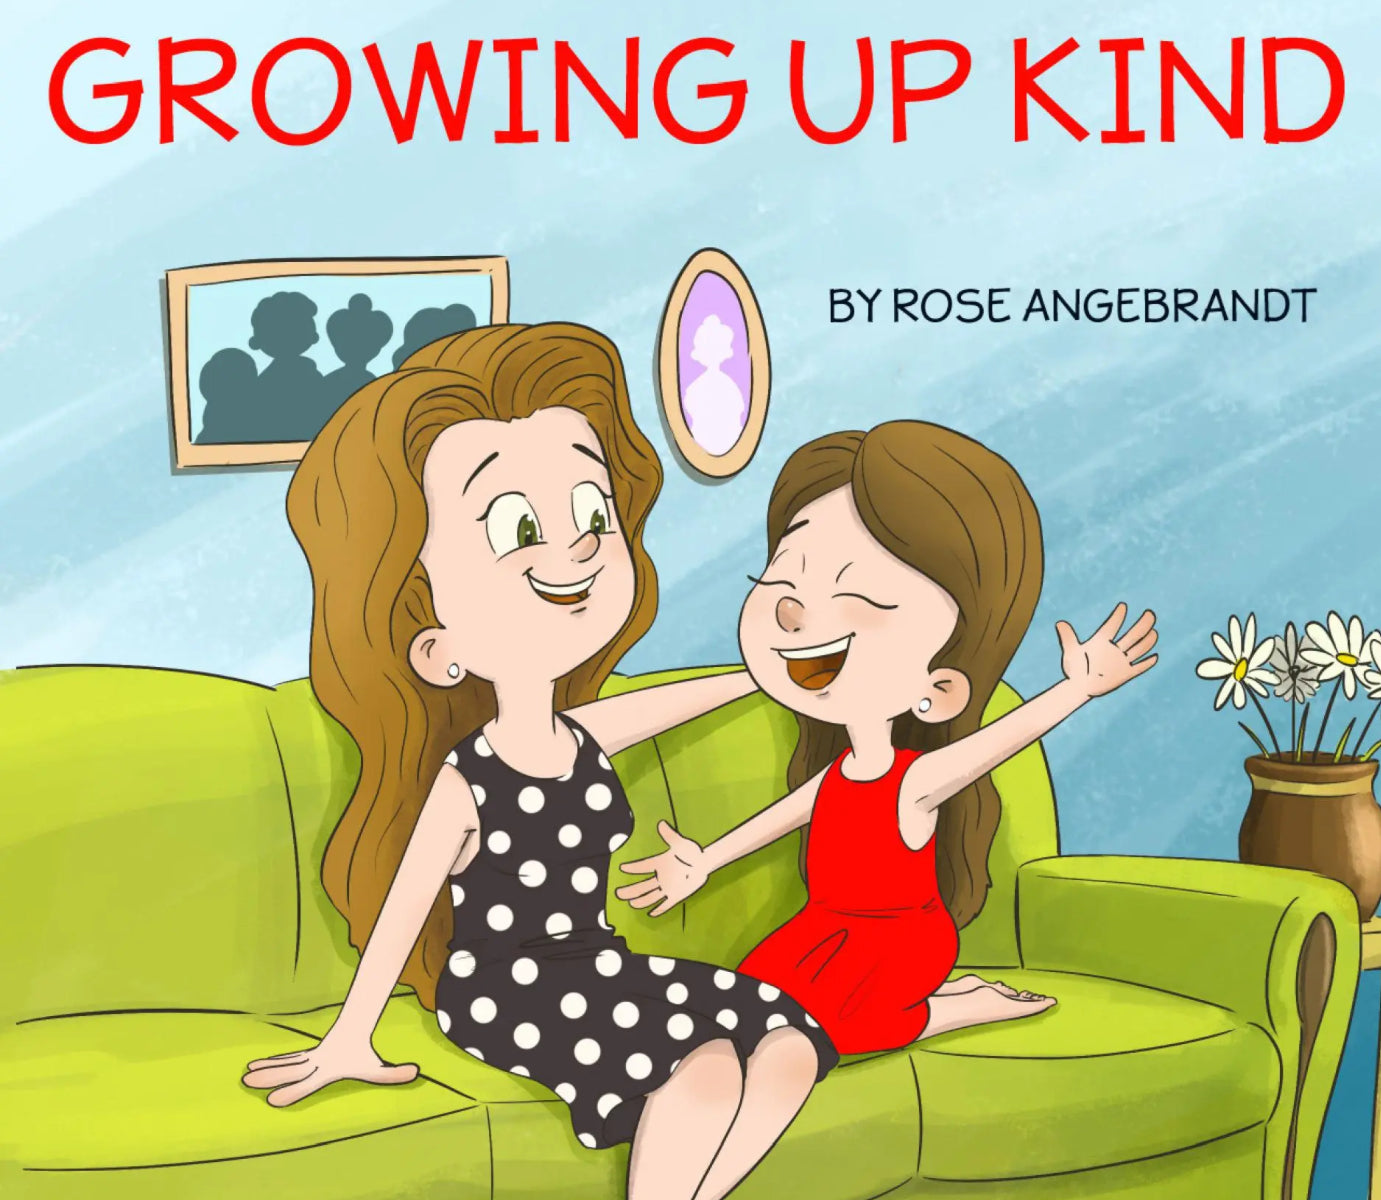 RA-01-KIN “Kind” Book 2 Growing Up Series